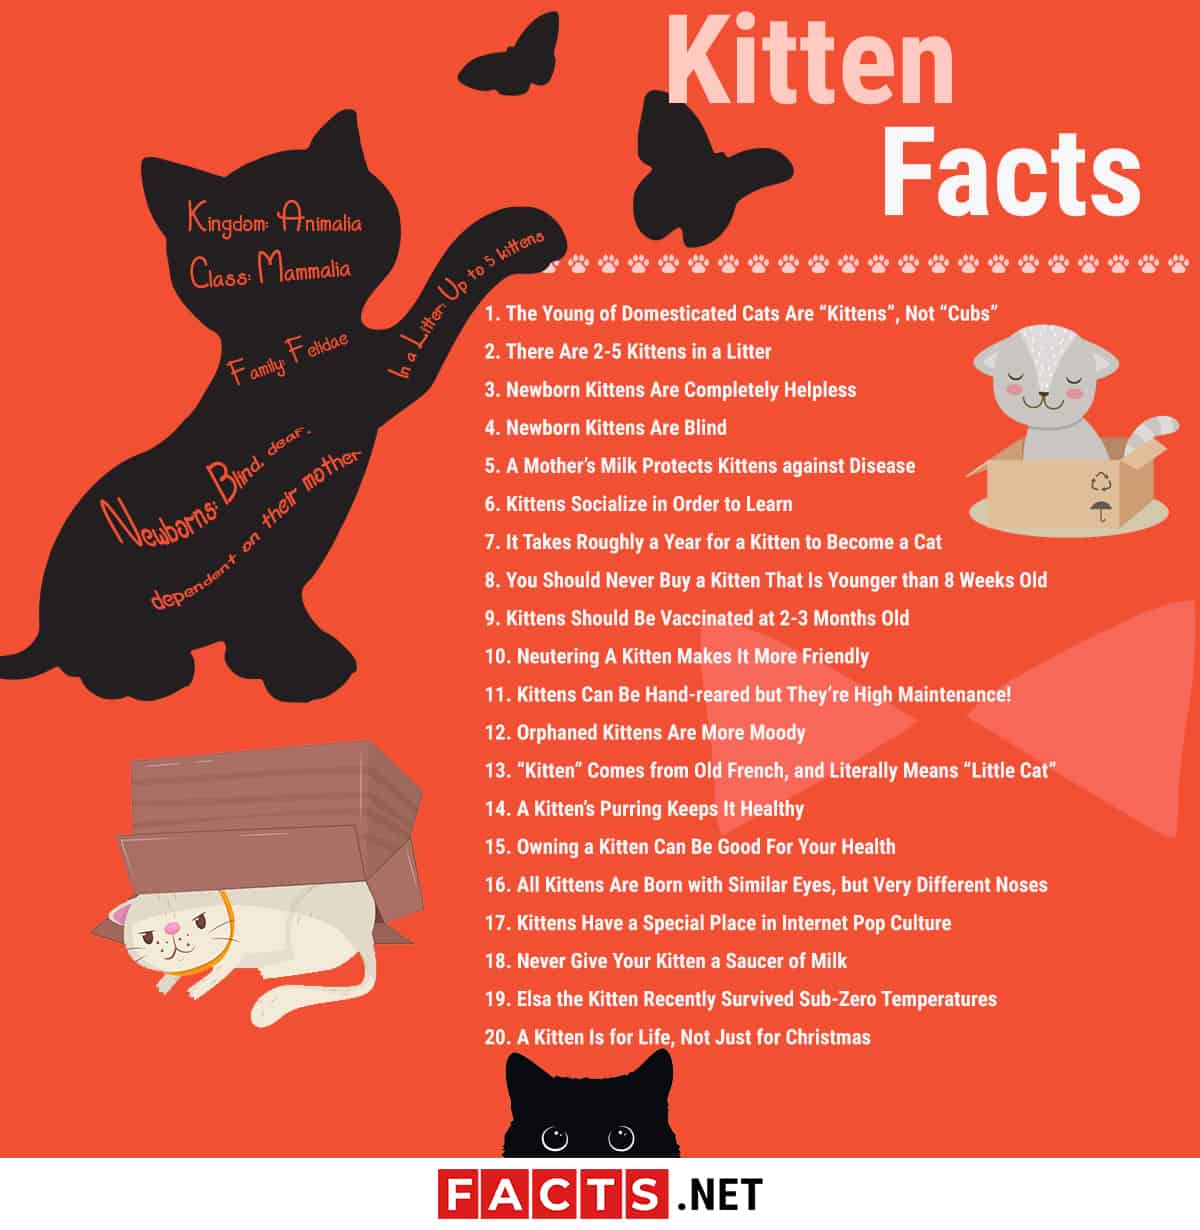 Top 20 Kitten Facts - Birth, Behavior, Development & More | Facts.net